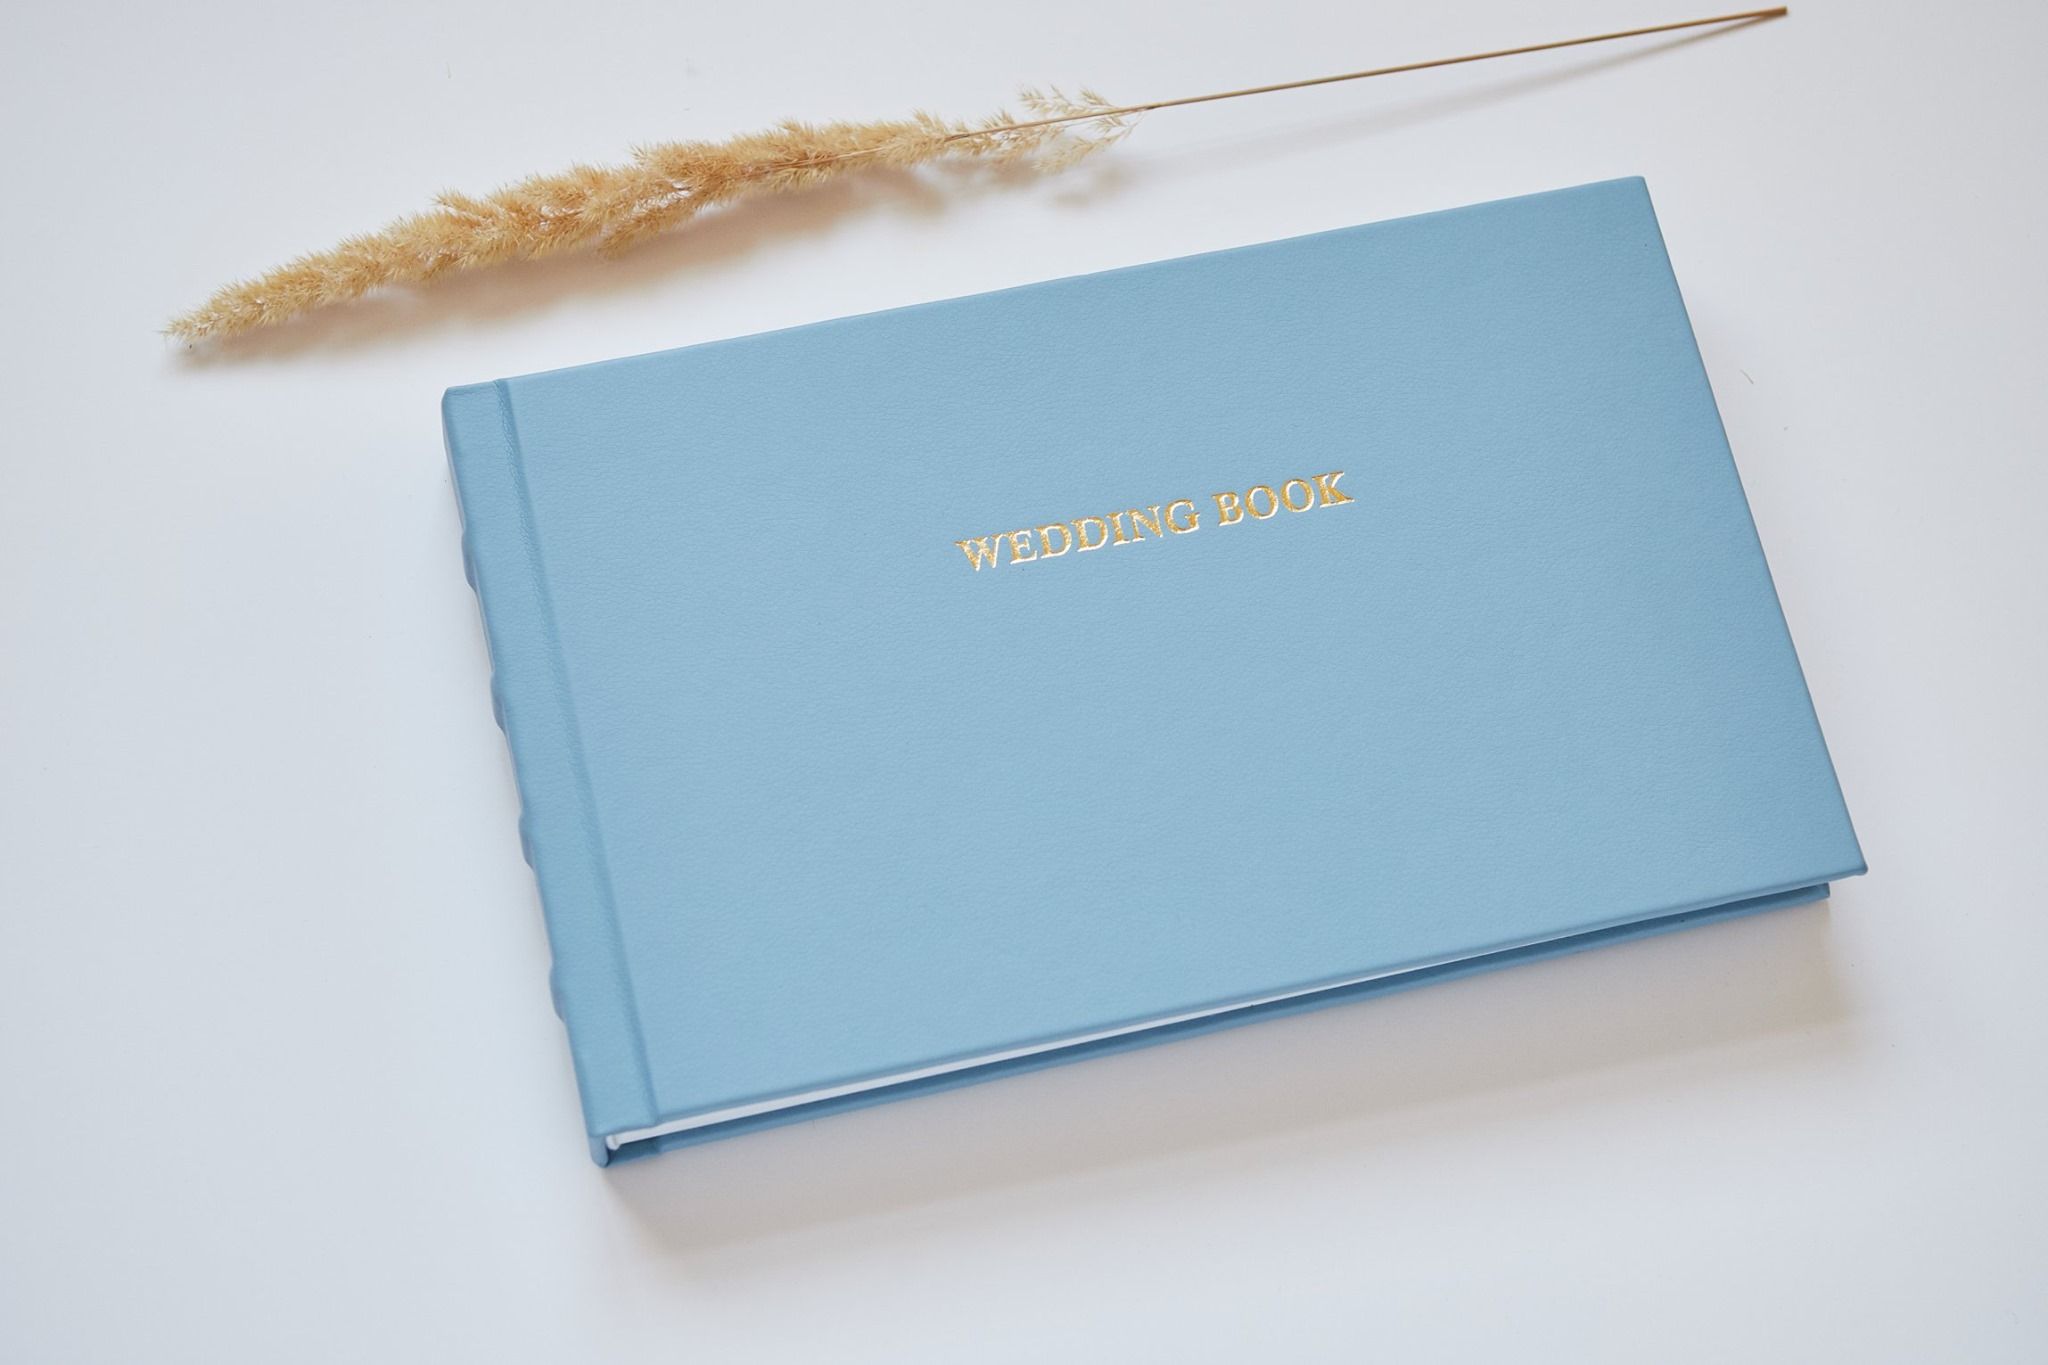 Examples of wedding photo books. Printing & design service. Photo 93368 (2023-05-04 04:08:56)